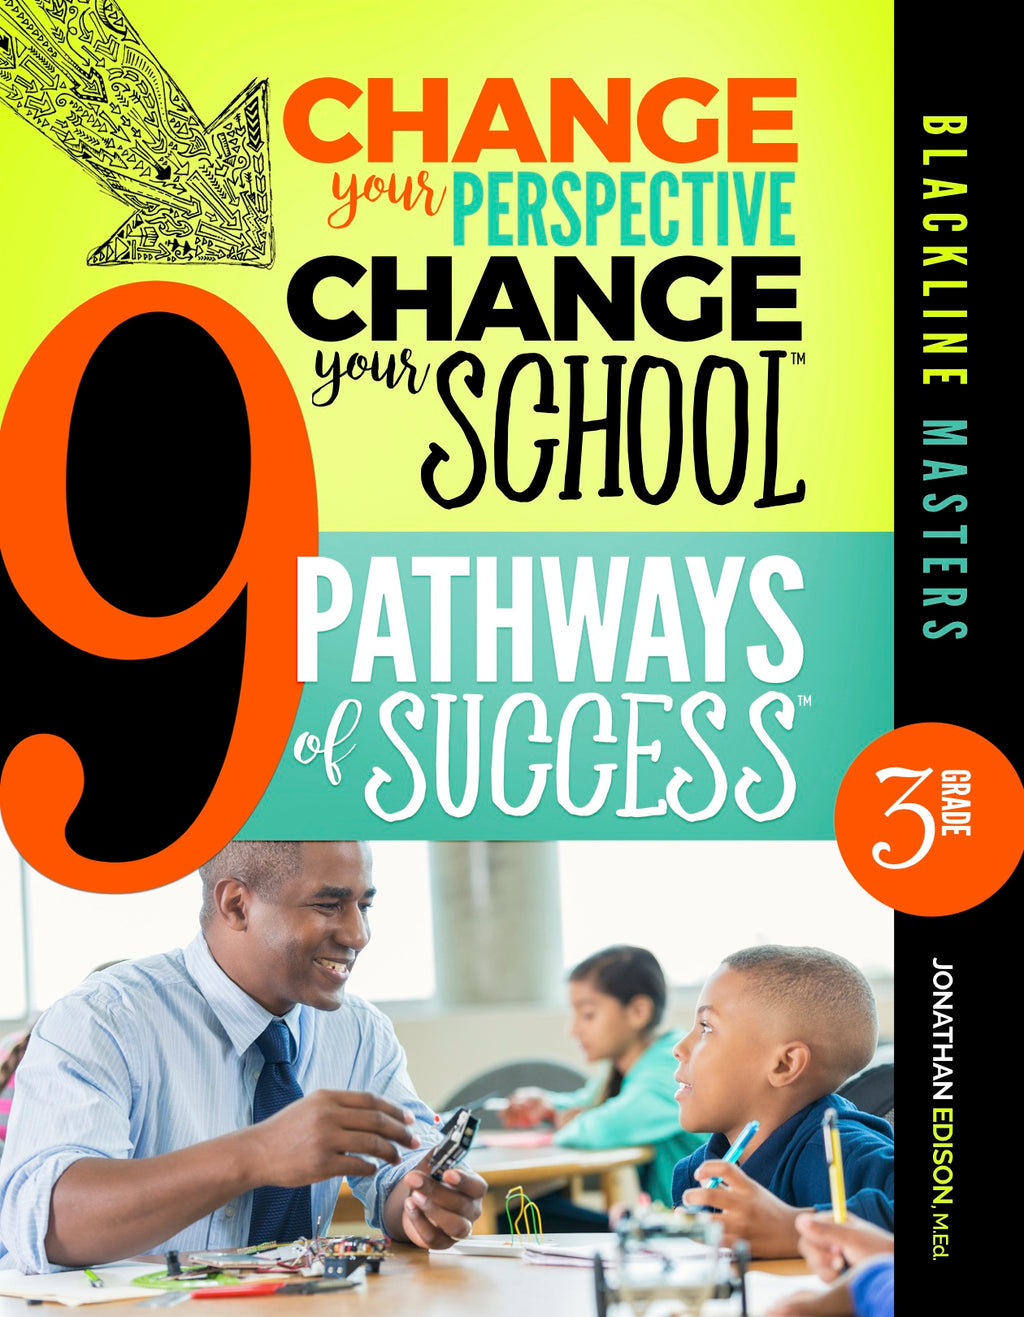 9 Pathways of Success-3rd Grade